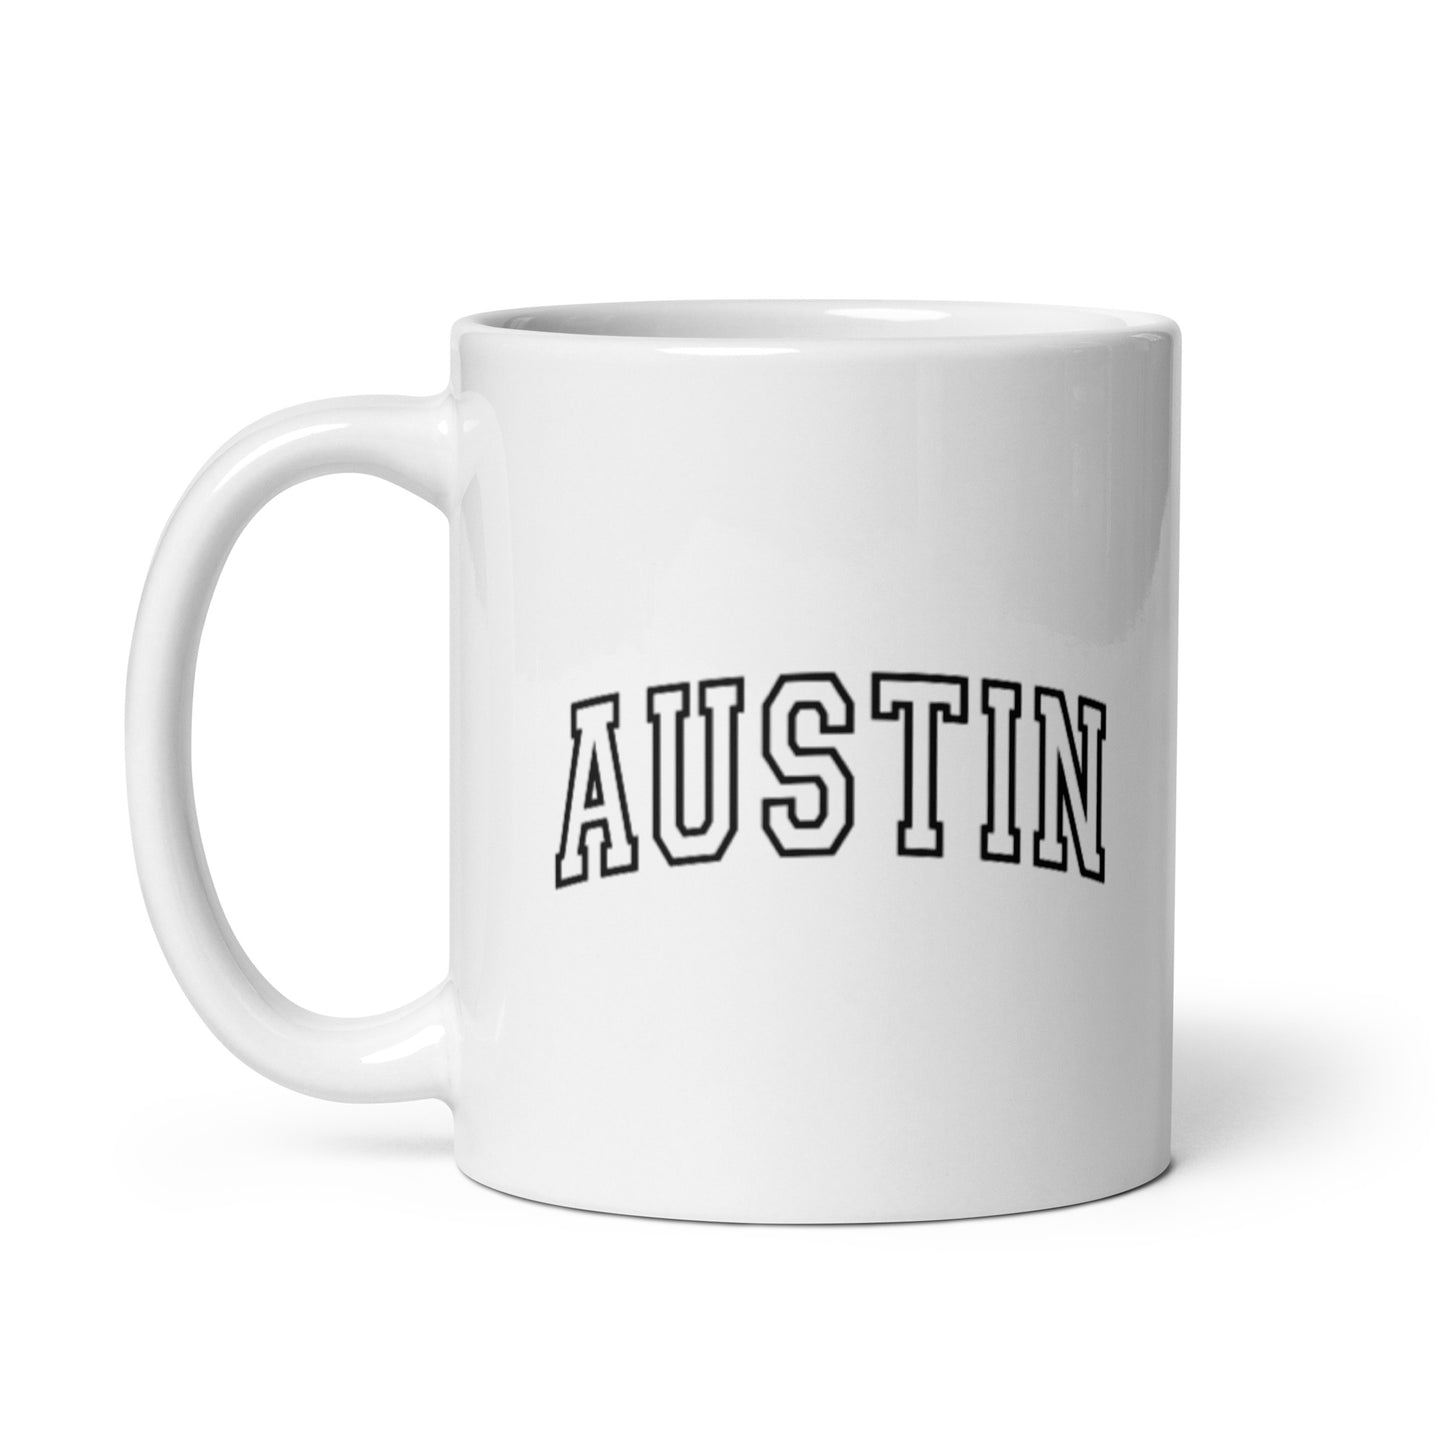 Austin White glossy mug